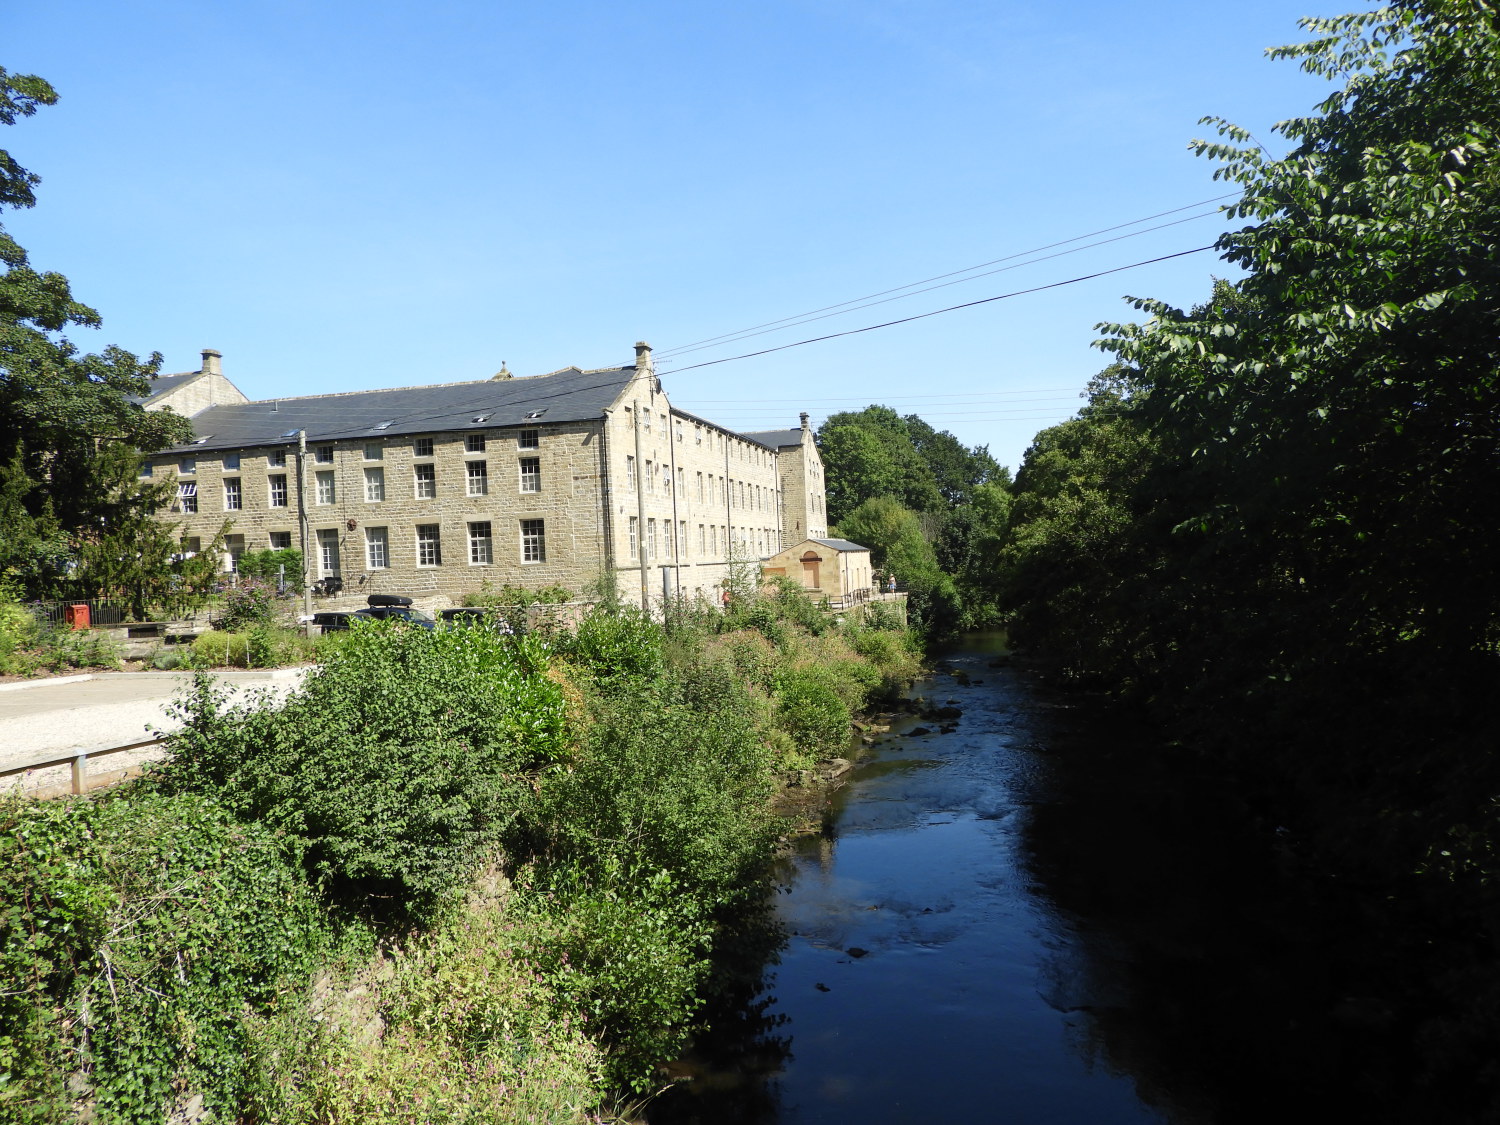 River Nidd at Glasshouses